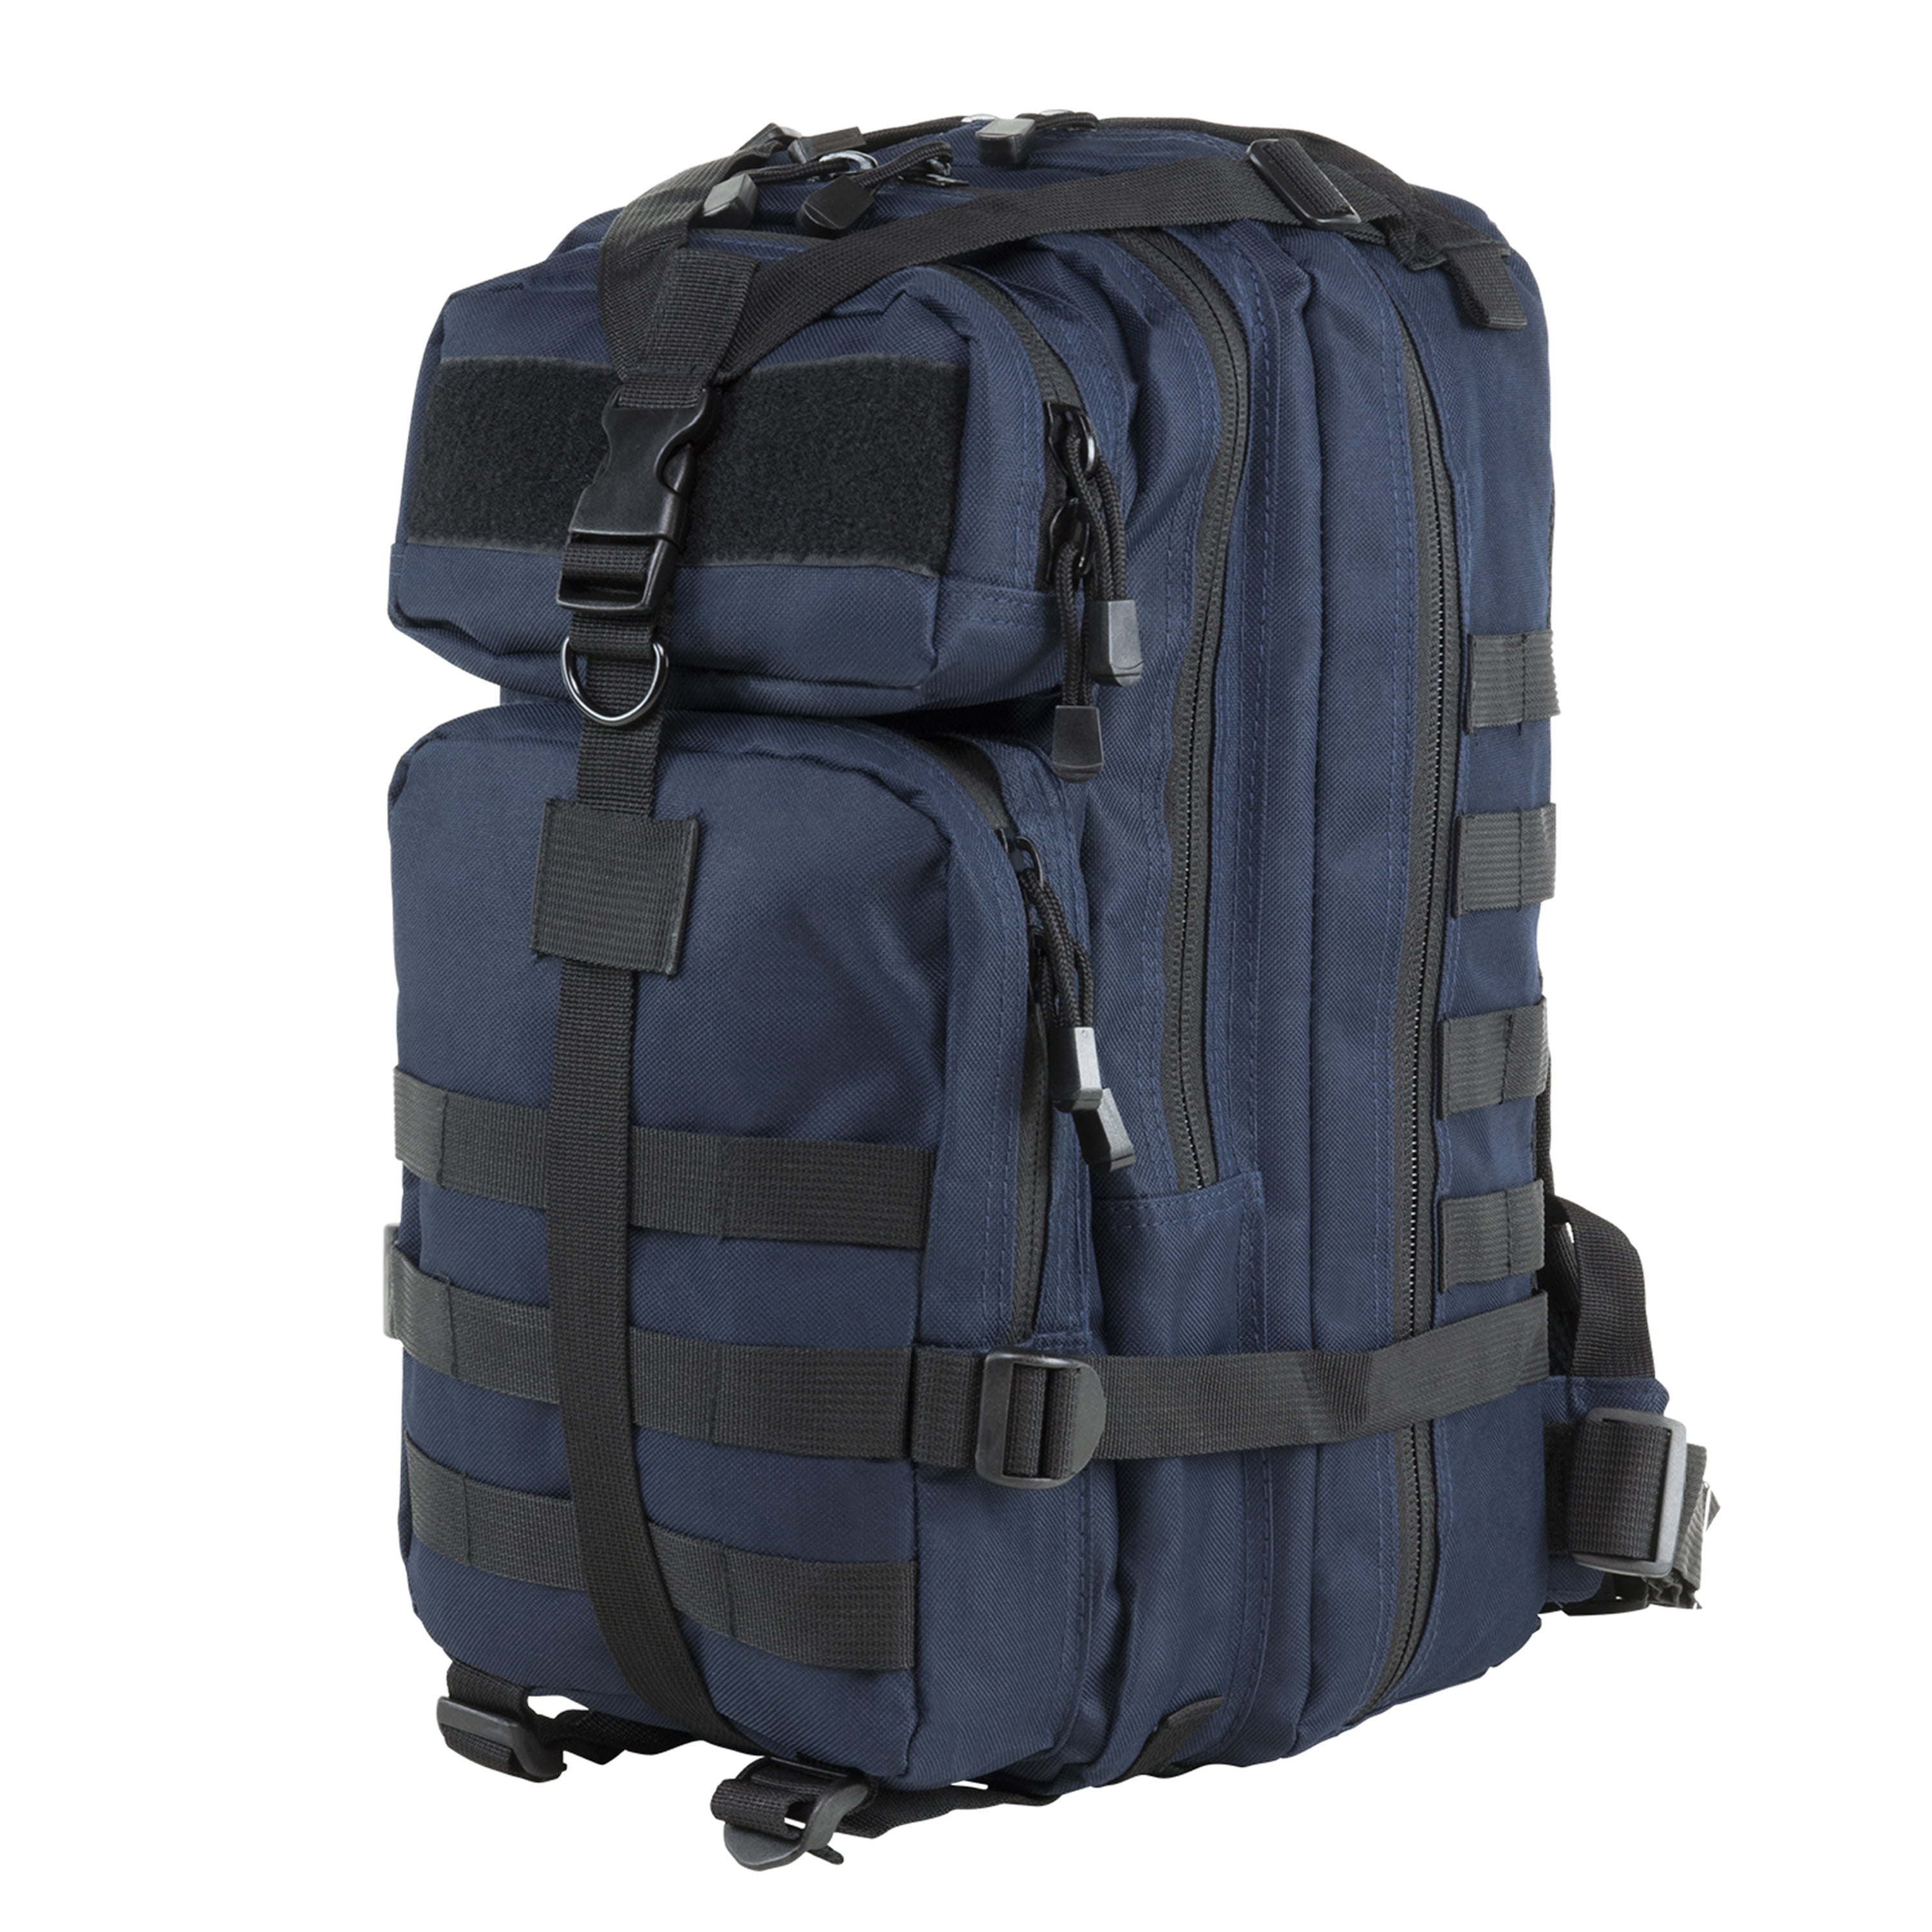 NcStar Small Backpack - Walmart.com